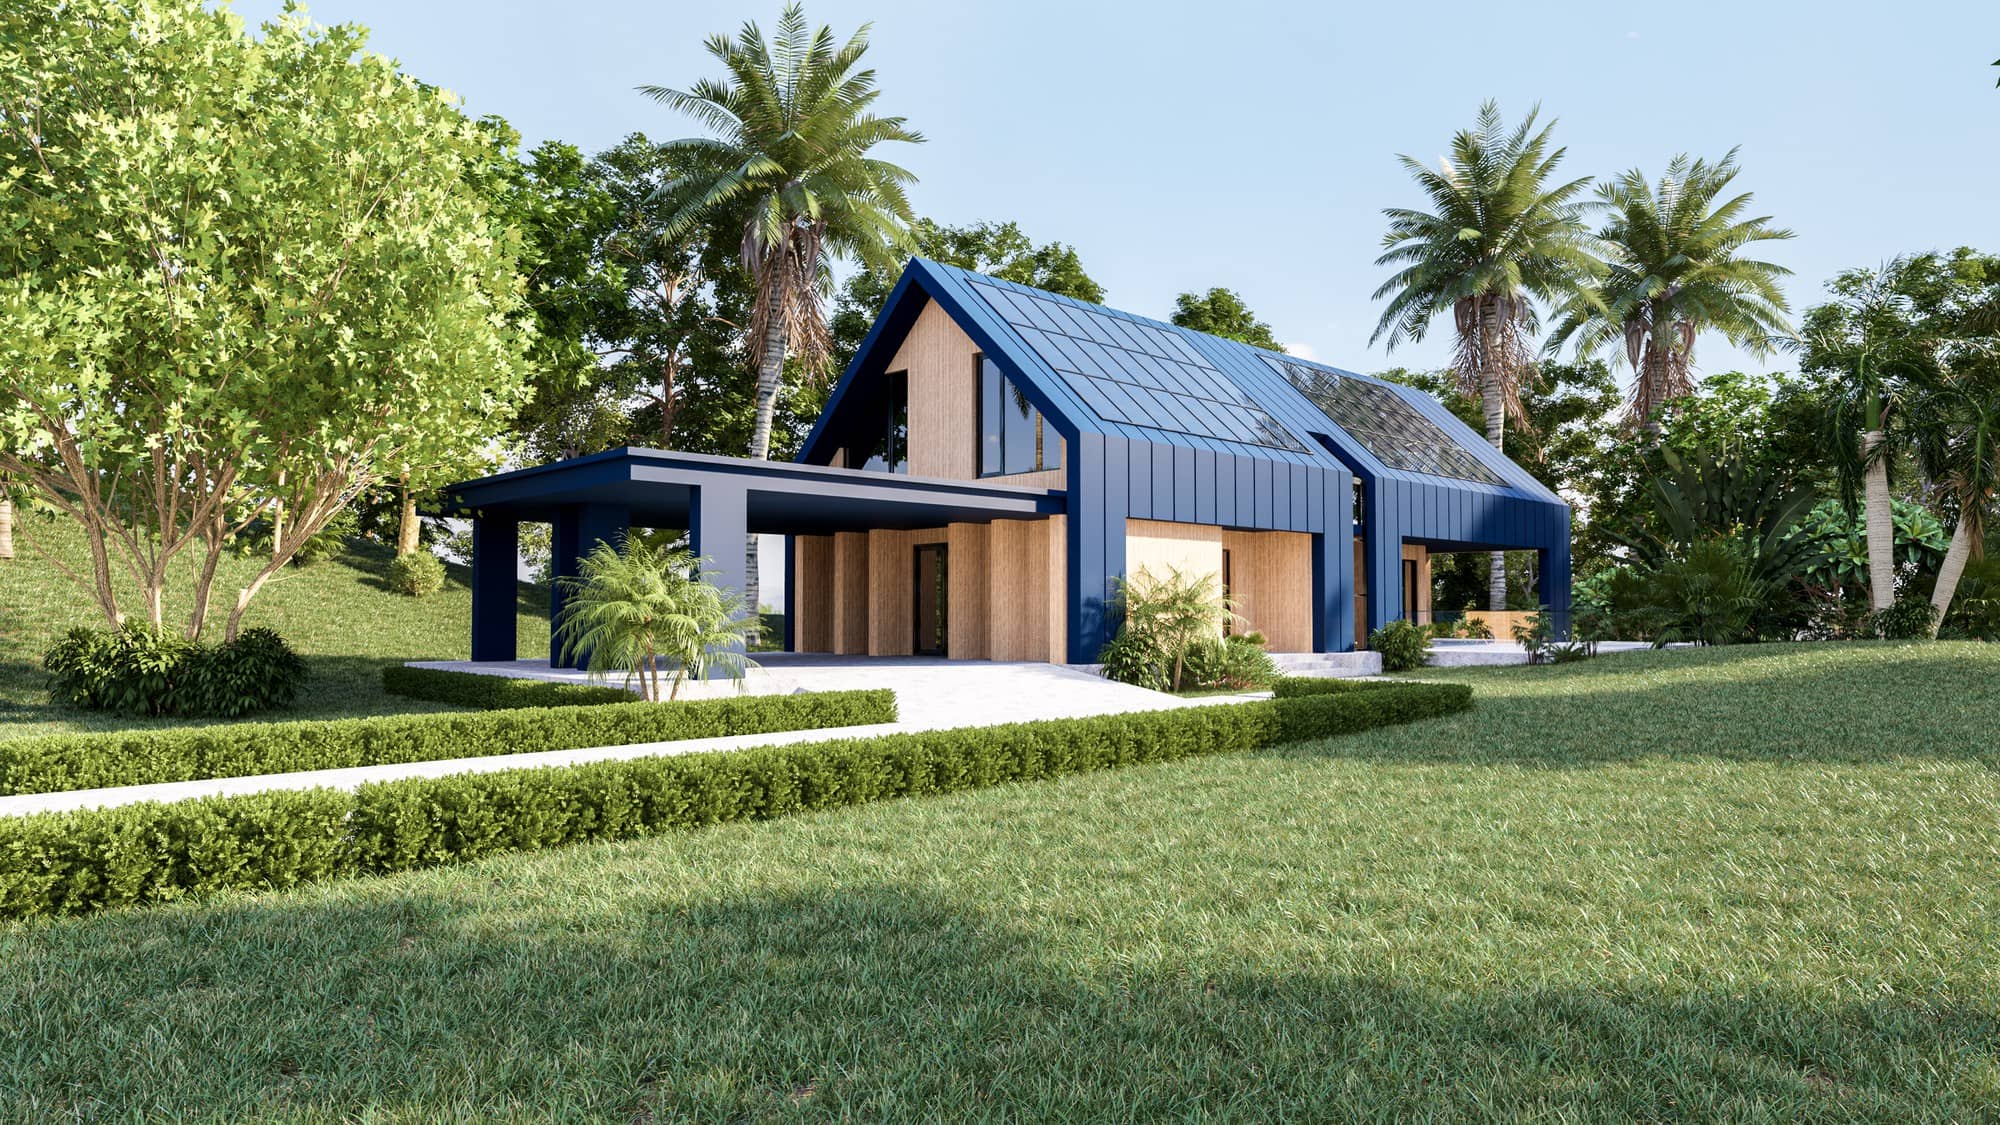 solar-panels-roof-modern-house-harvesting-renewable-energy-with-solar-cell-panels-exterior-design-3d-rendering (1)